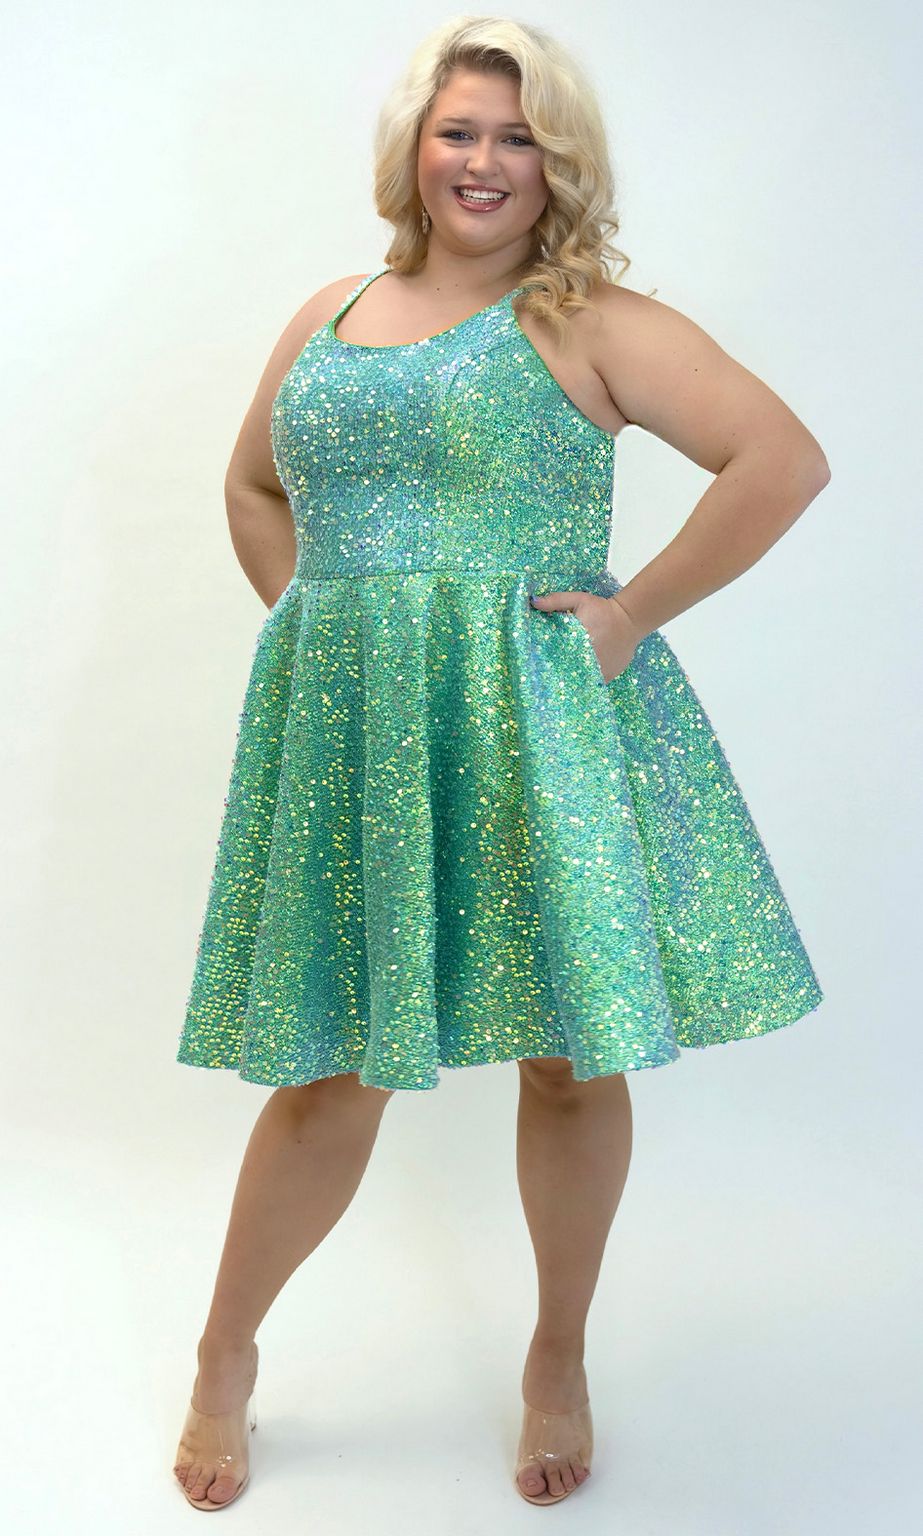 Plus Size Dresses Short Plus Size Homecoming Sequin Dress Iridescent Green